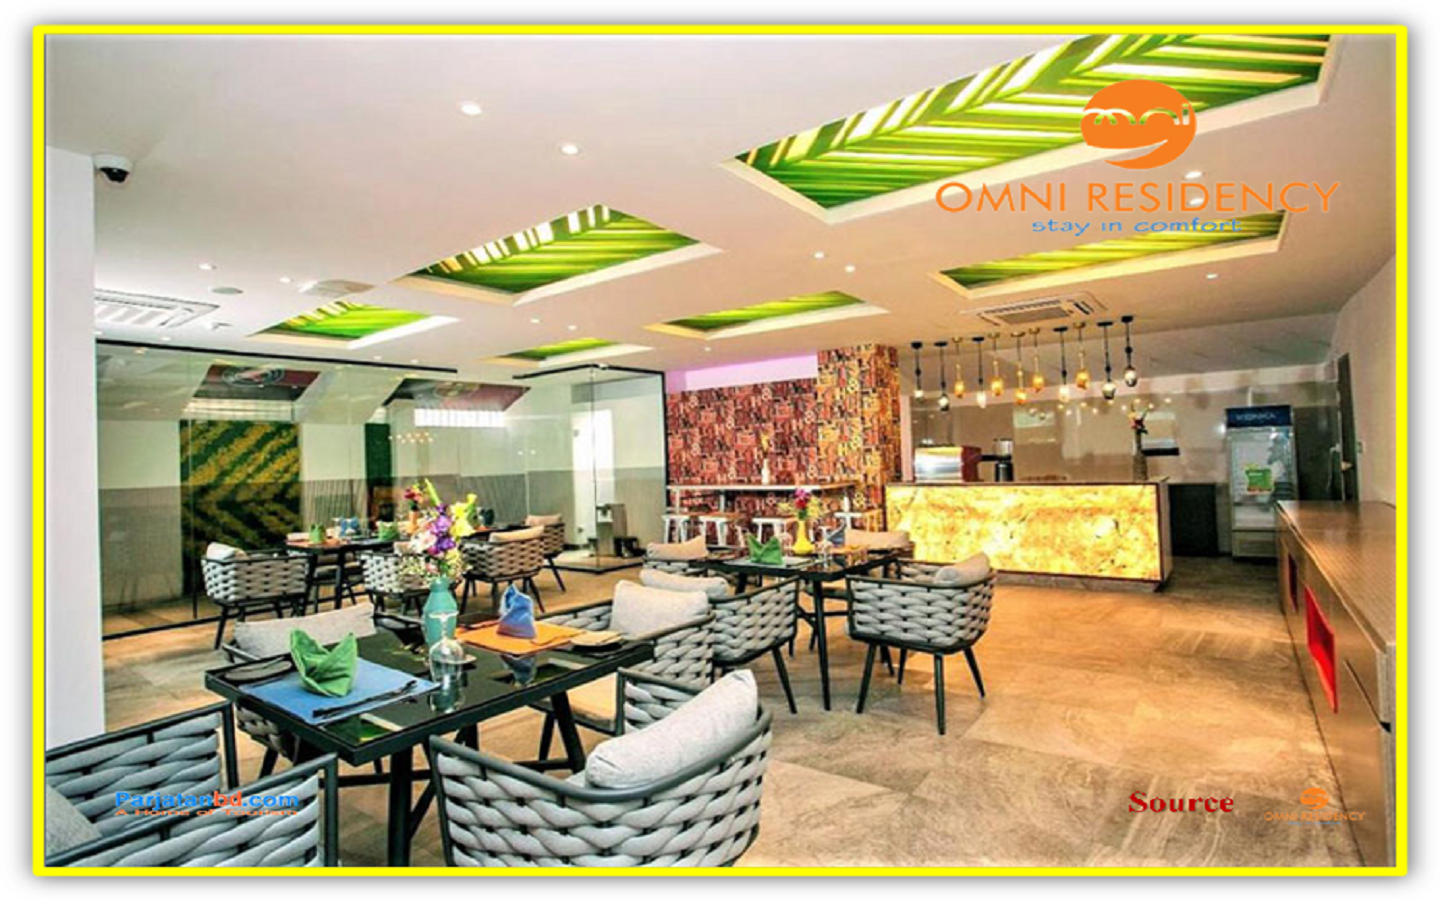 Hotel Omni Residancy, Banani Picture-1